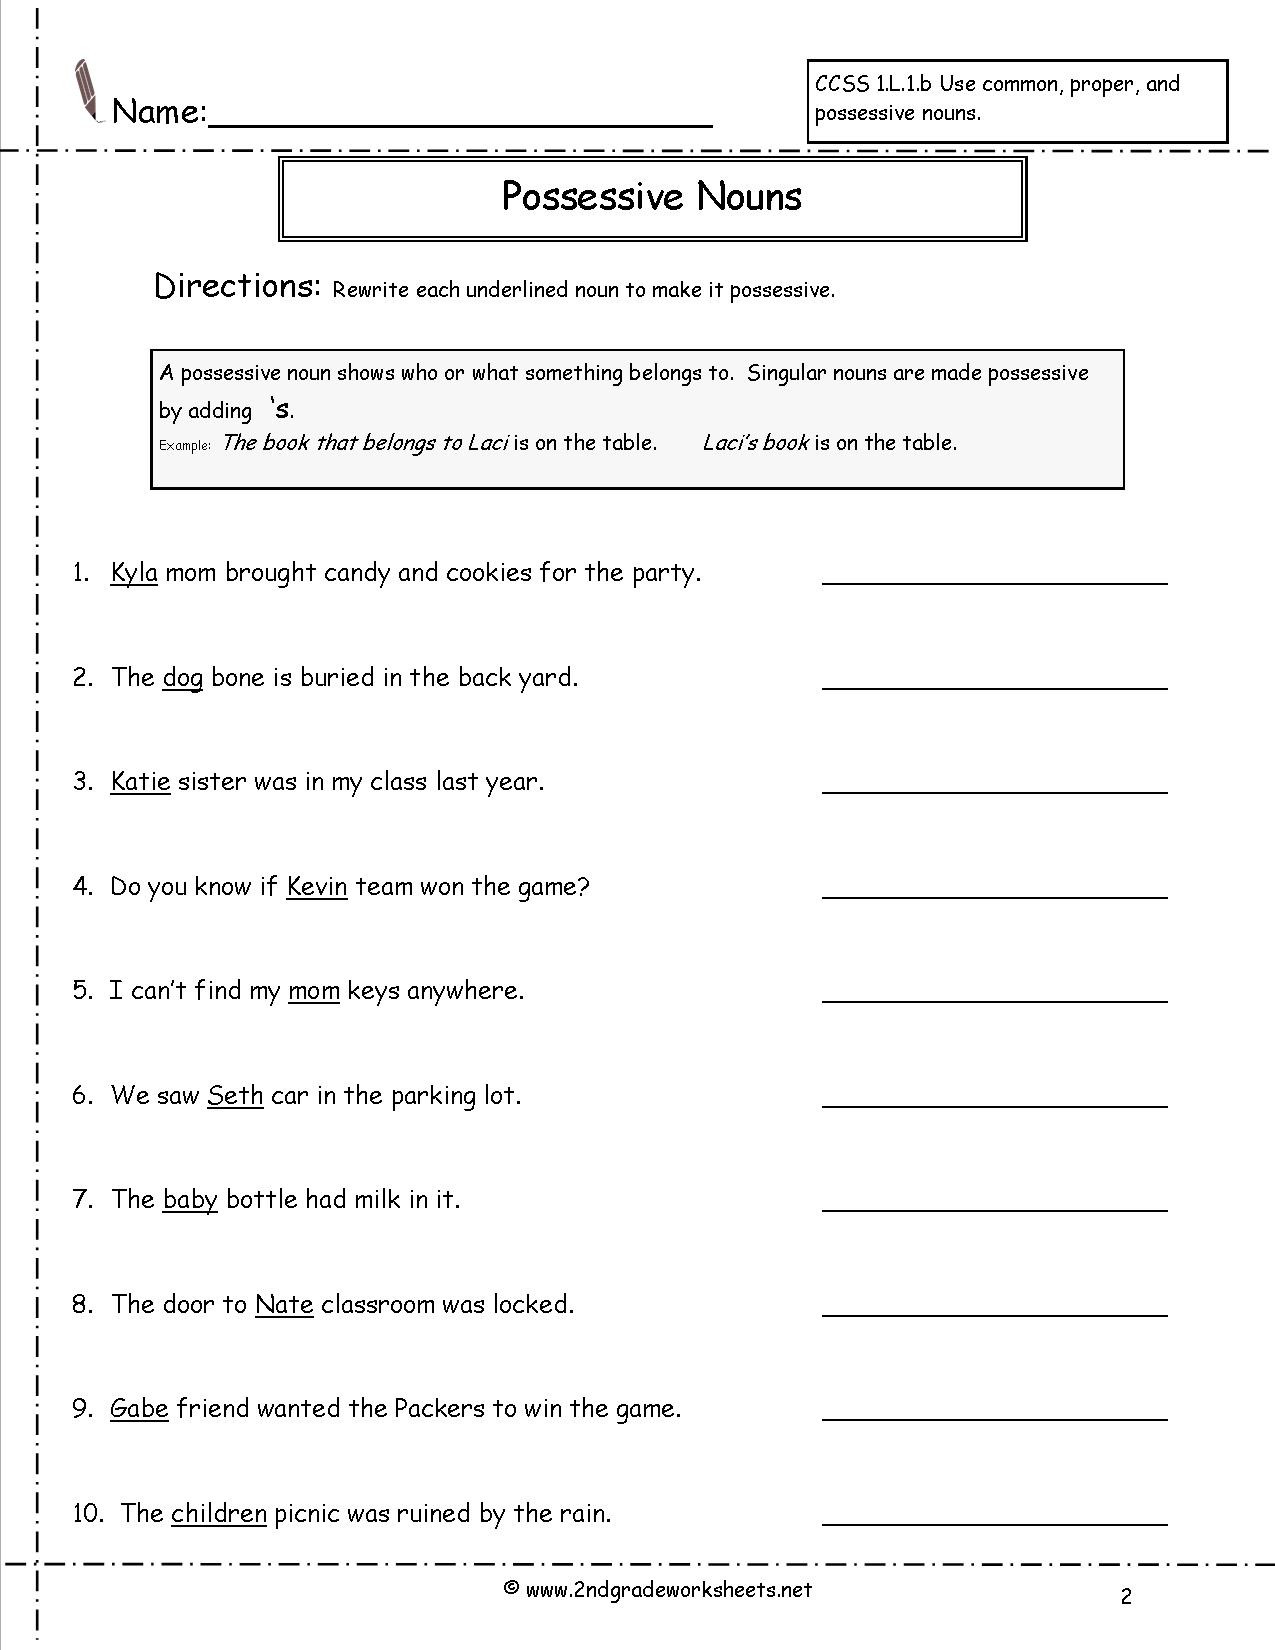 Possessive Pronouns Worksheet 2nd Grade Second Grade Possessive Nouns Worksheets